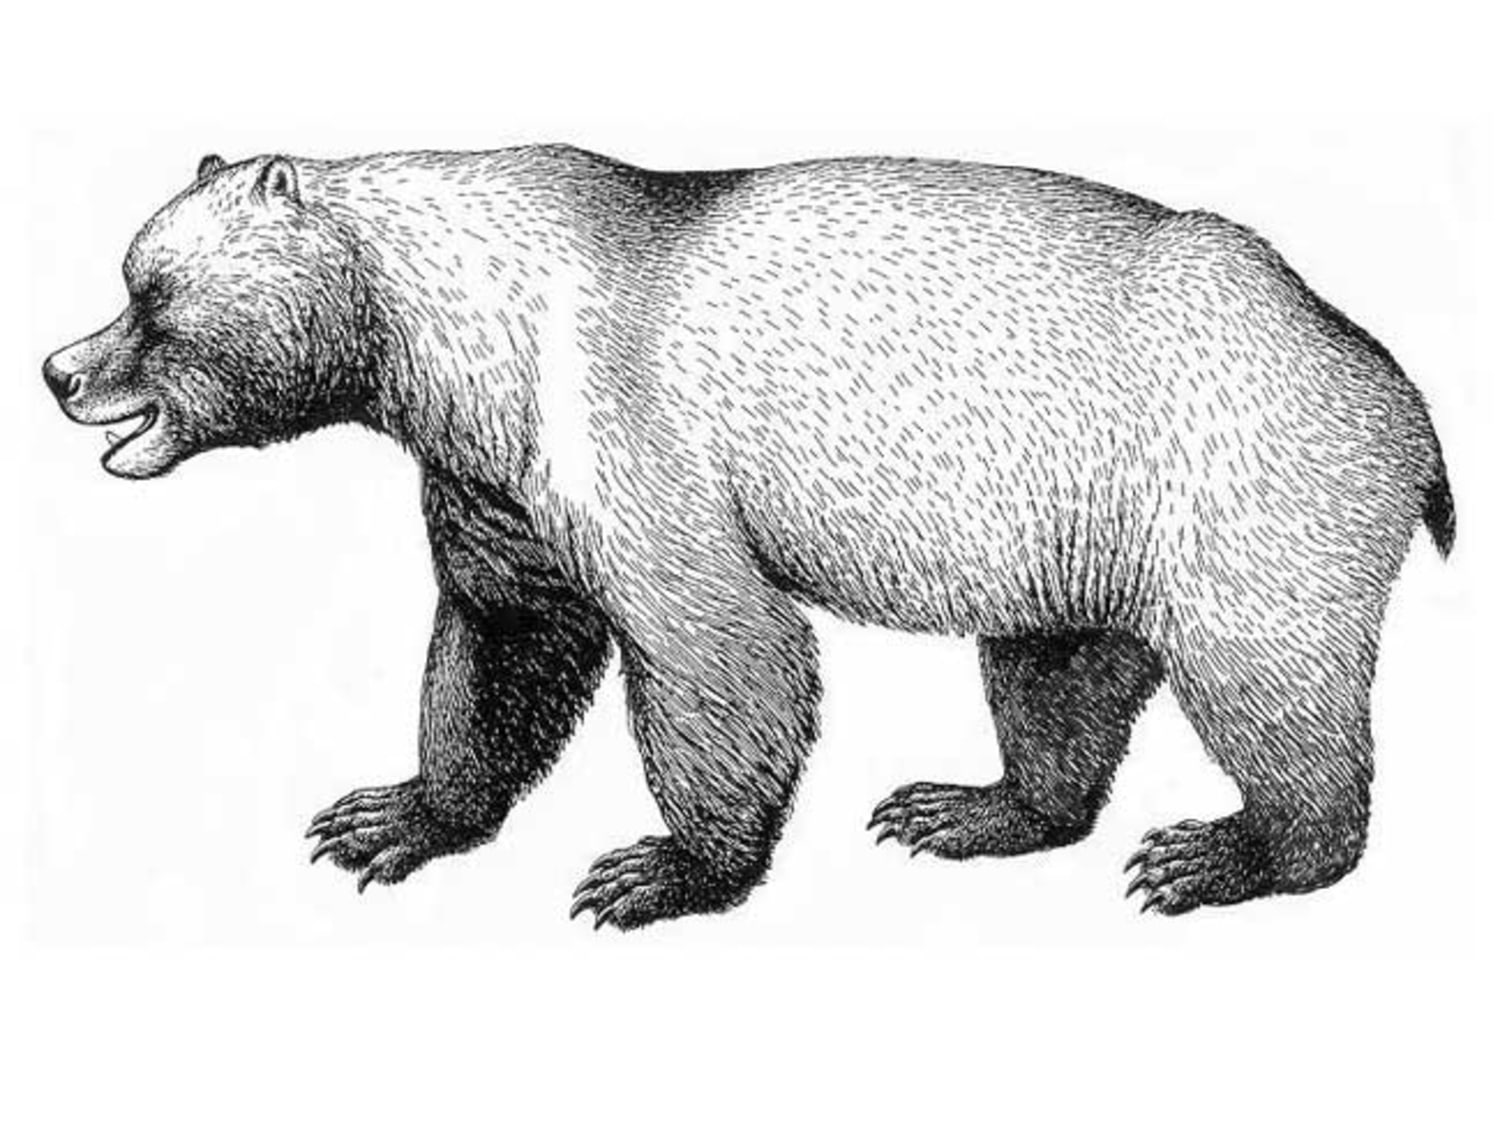 Did vegetarian diet kill off giant cave bears?